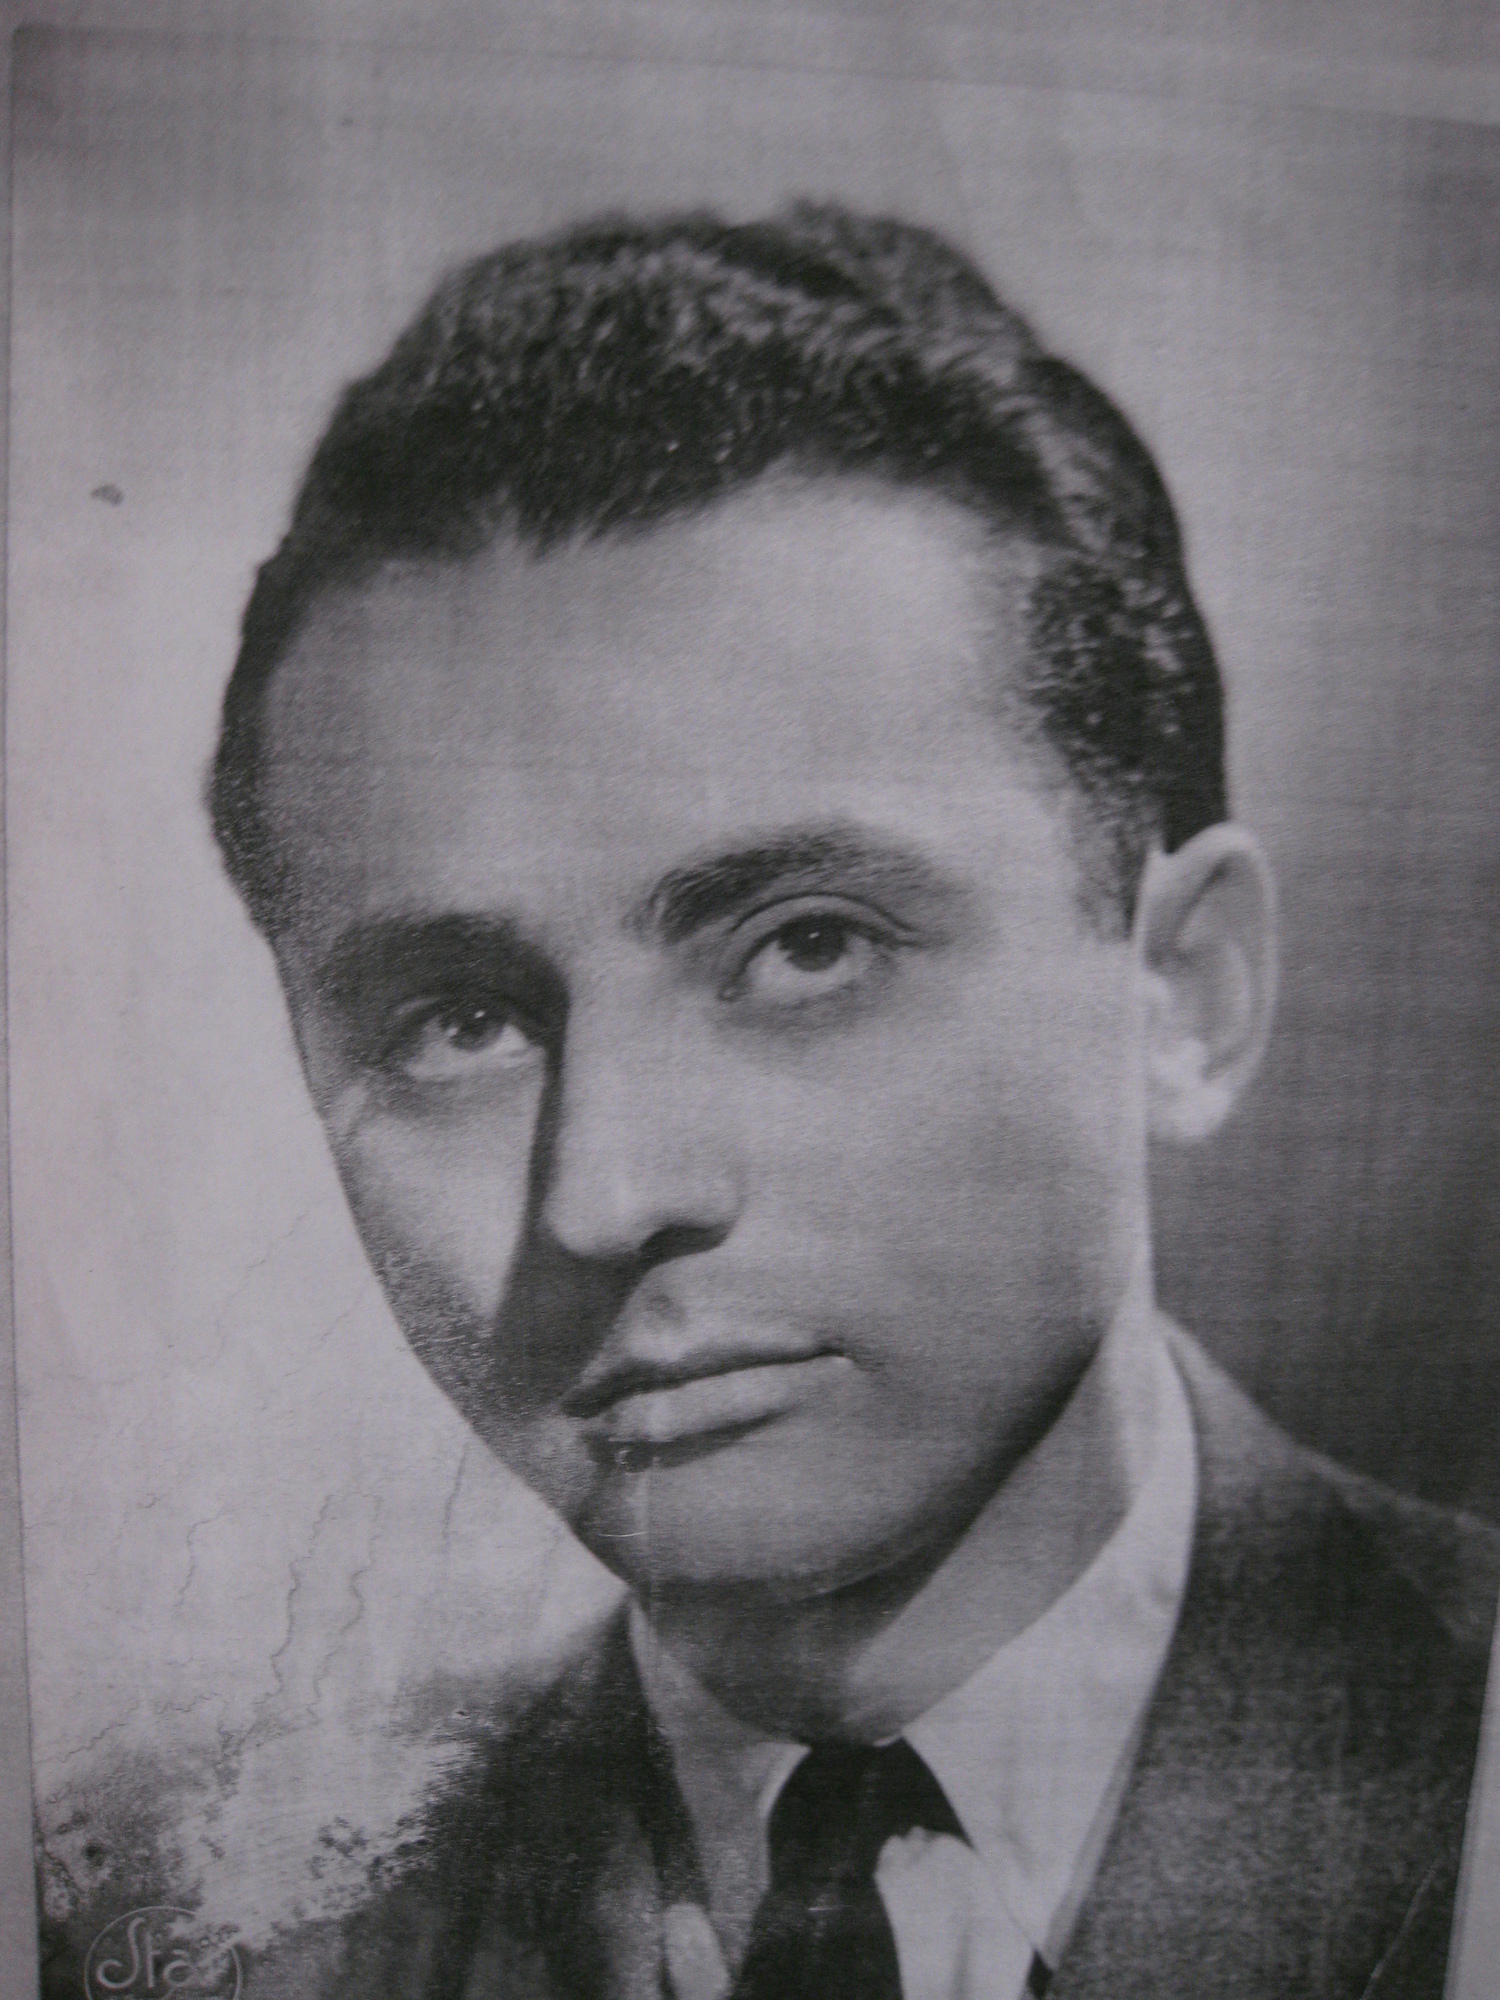 C. Rybár in 1945 cca